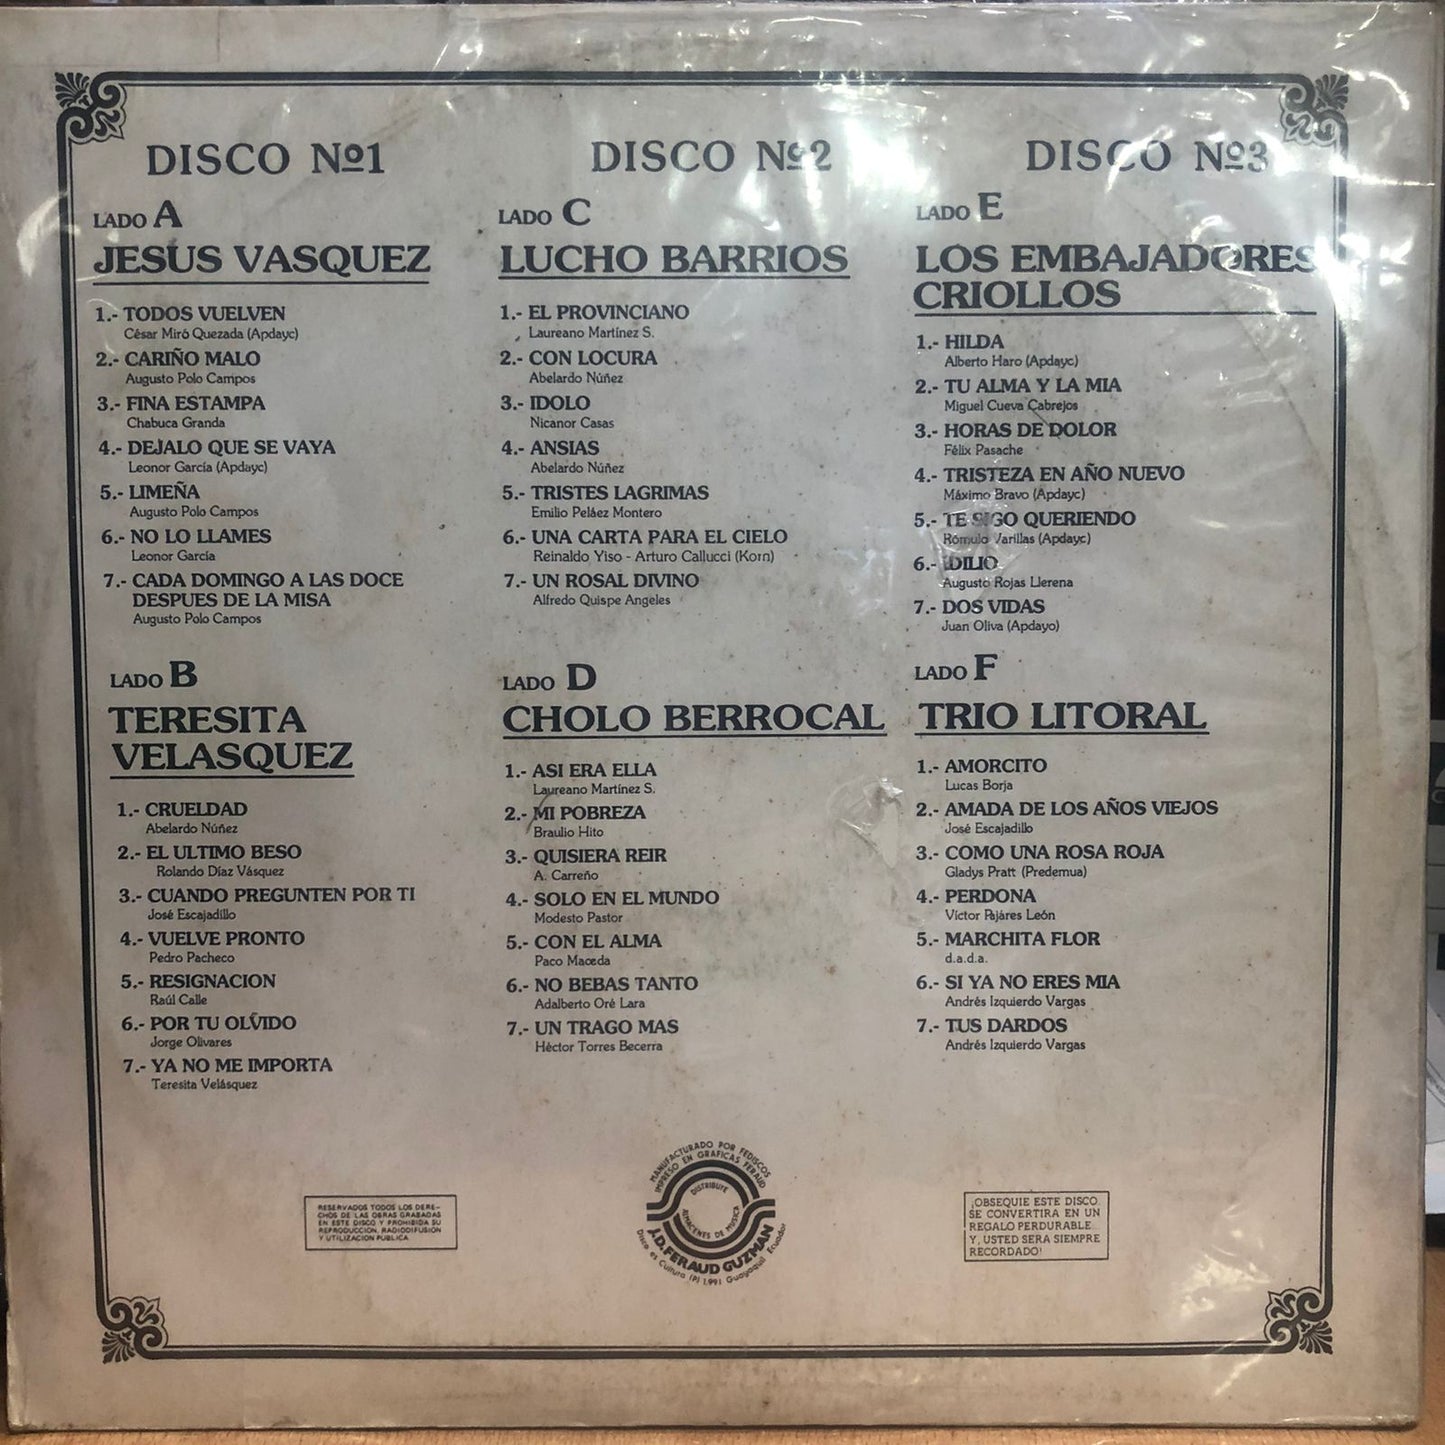 VALSECITOS DEL RECUERDO LP TRIPLE